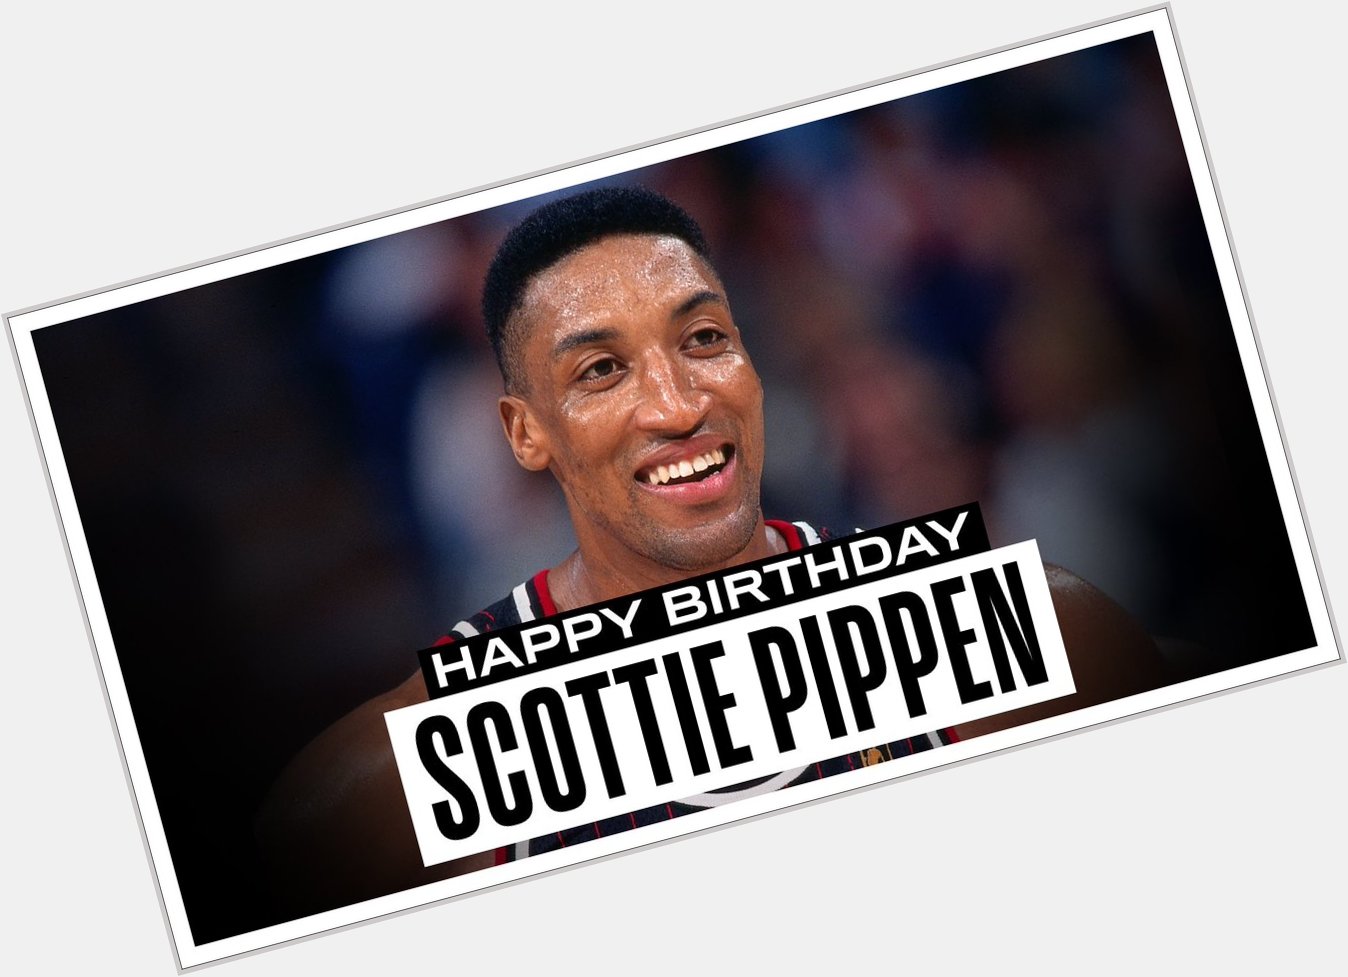 Happy birthday to Scottie Pippen he turns 55 